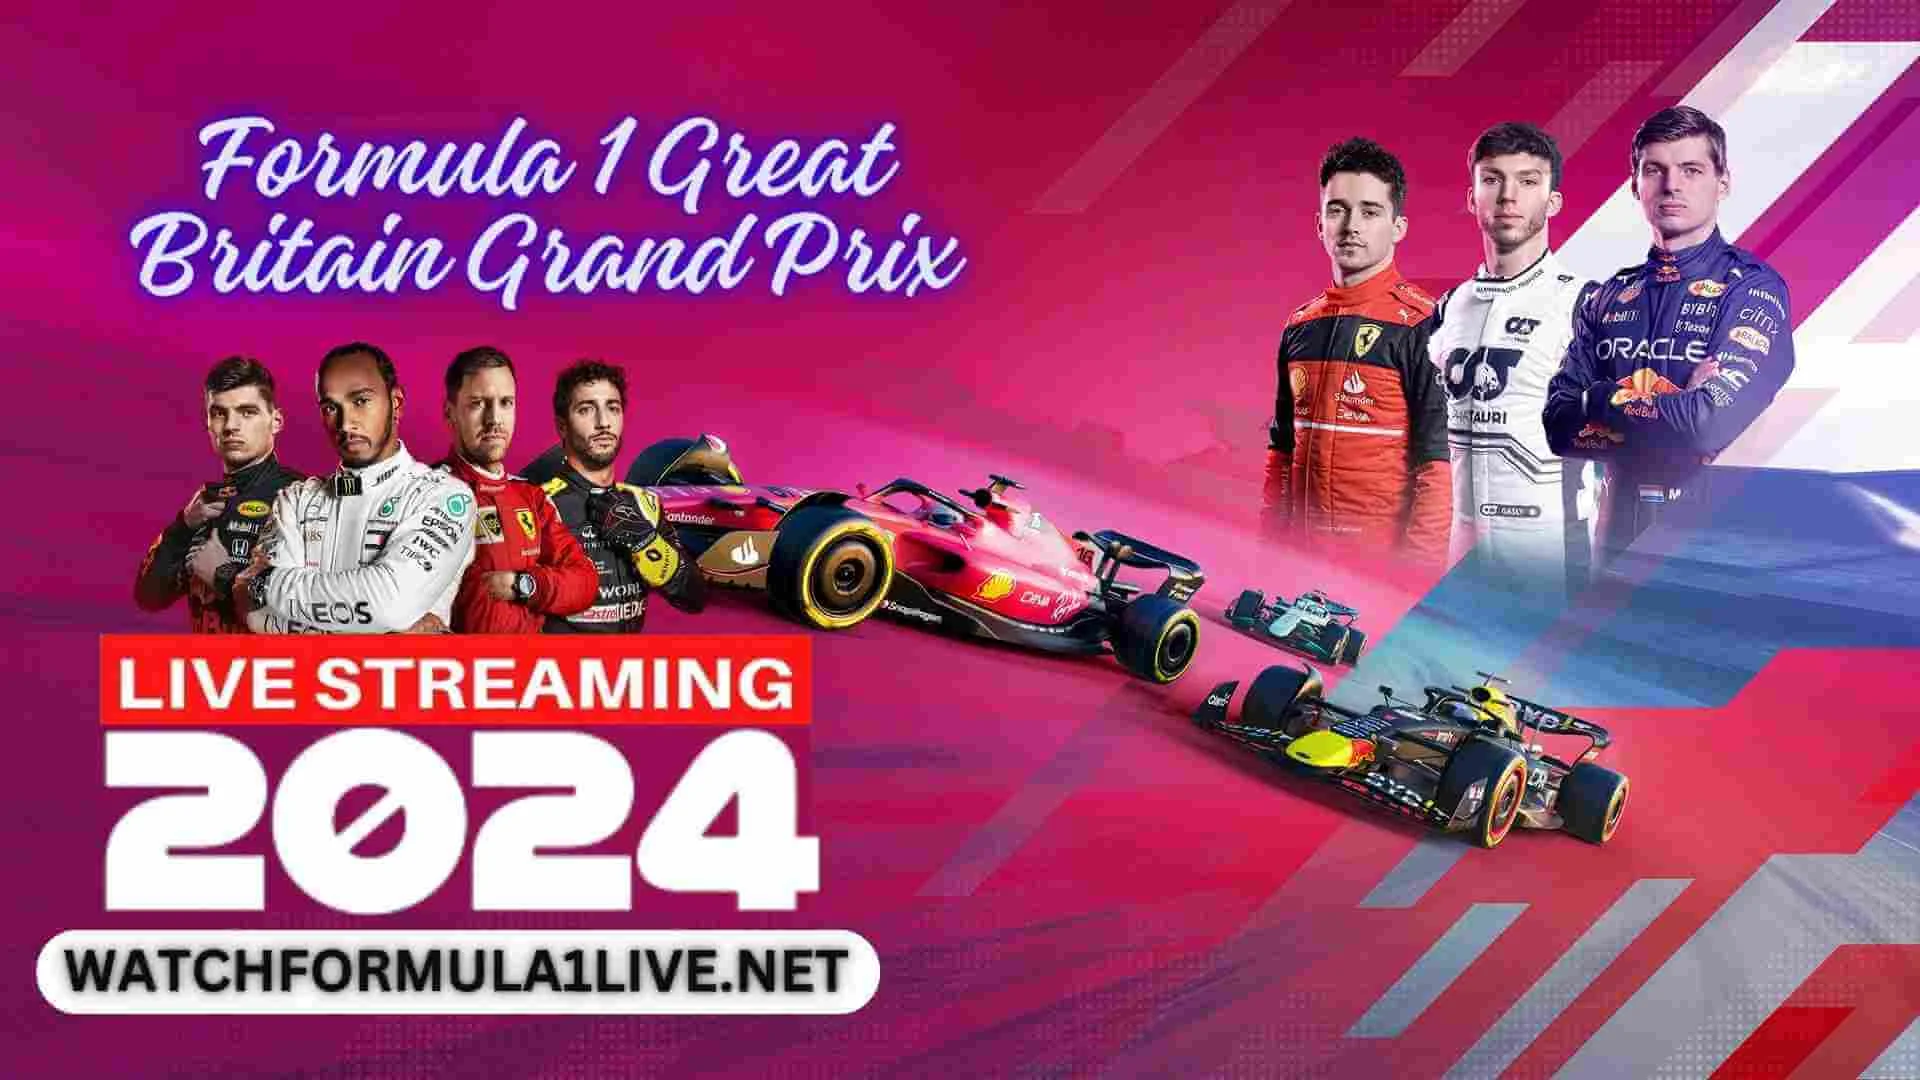 formula-1-great-britain-grand-prix-live-stream